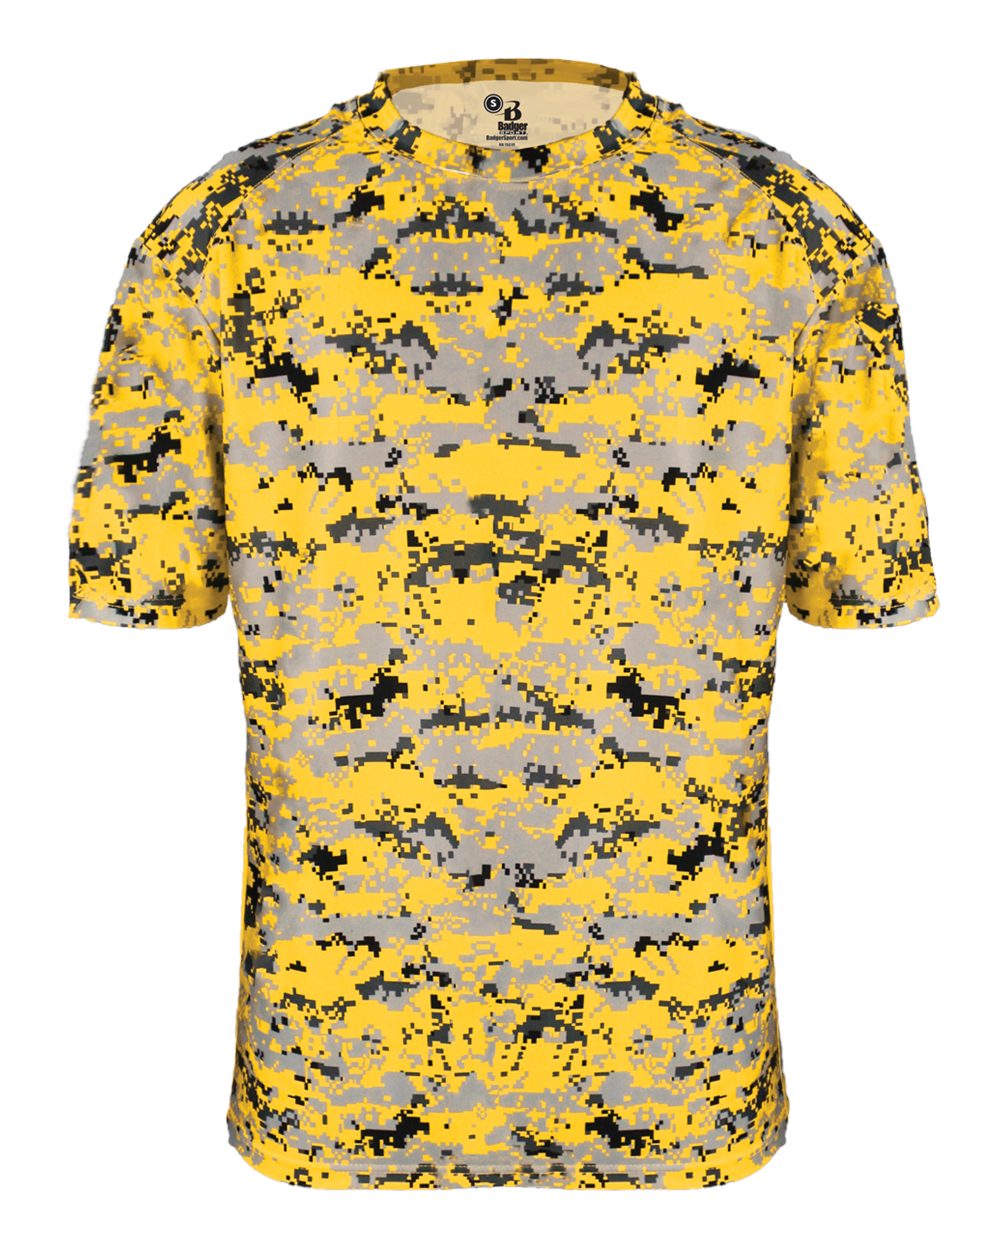 custom camouflage baseball jerseys